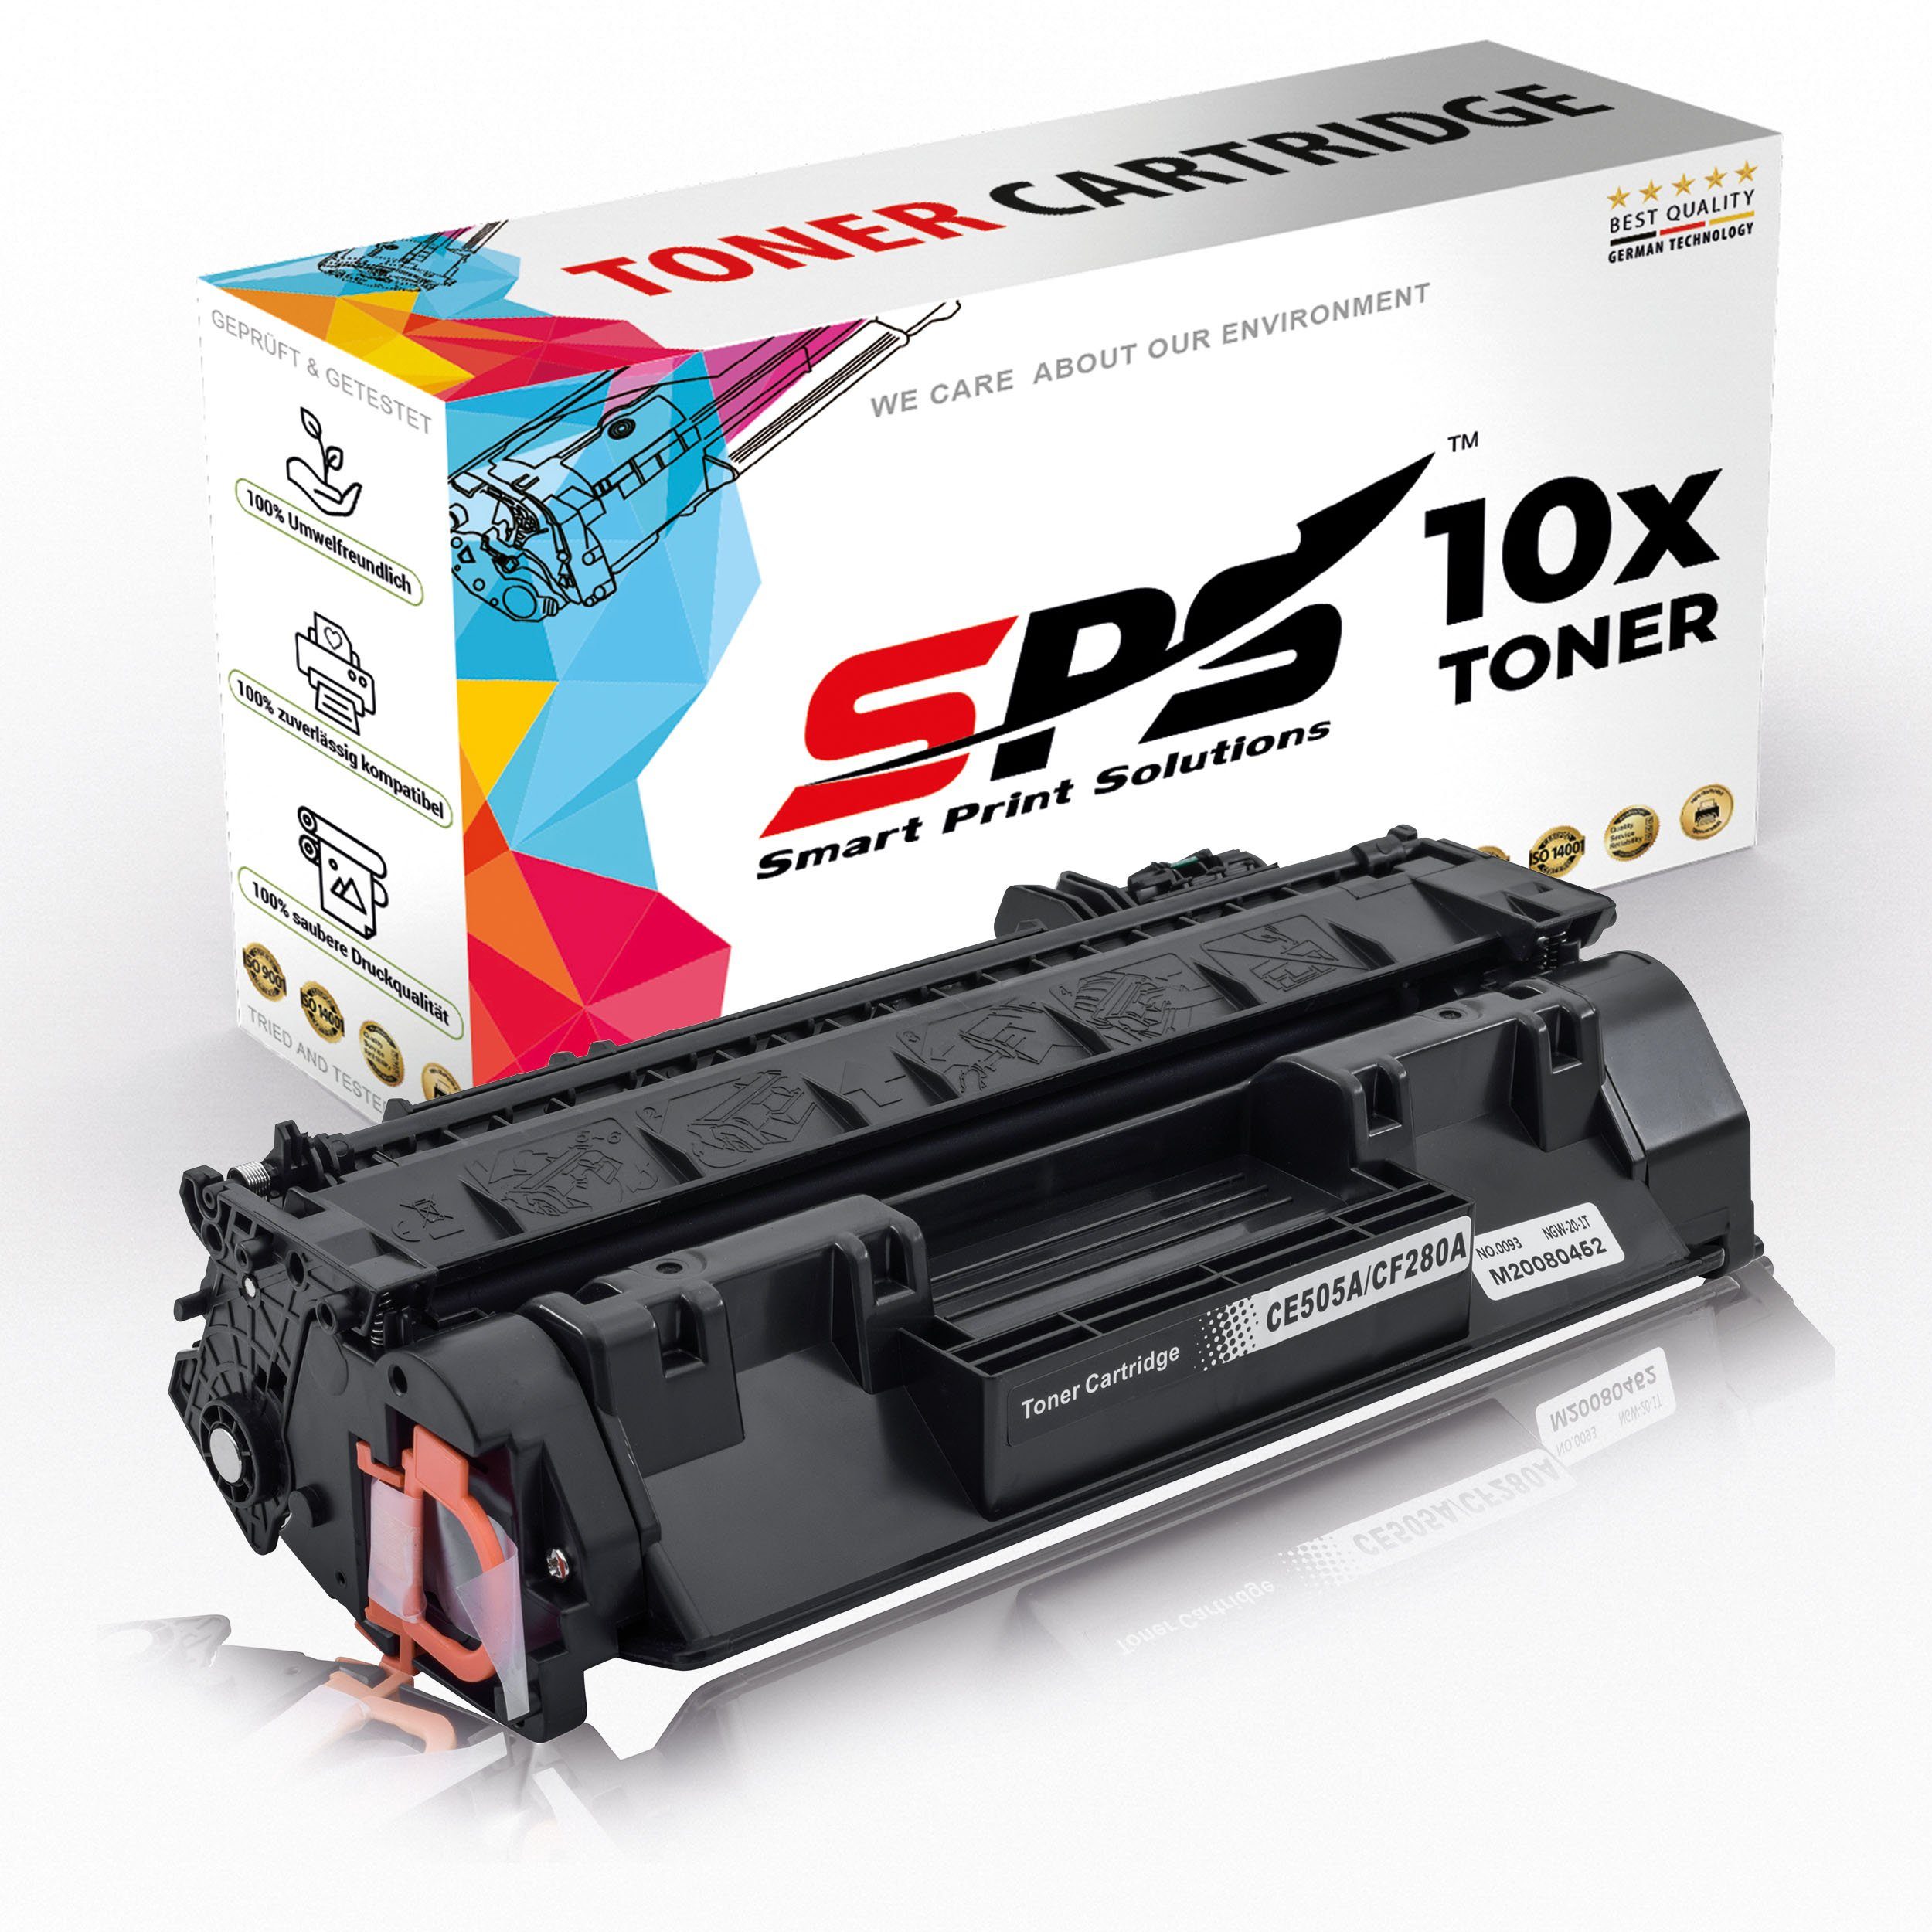 SPS Tonerkartusche Kompatibel für HP Laserjet Pro 400 MFP M425DW 80A, (10er Pack) | Tonerpatronen